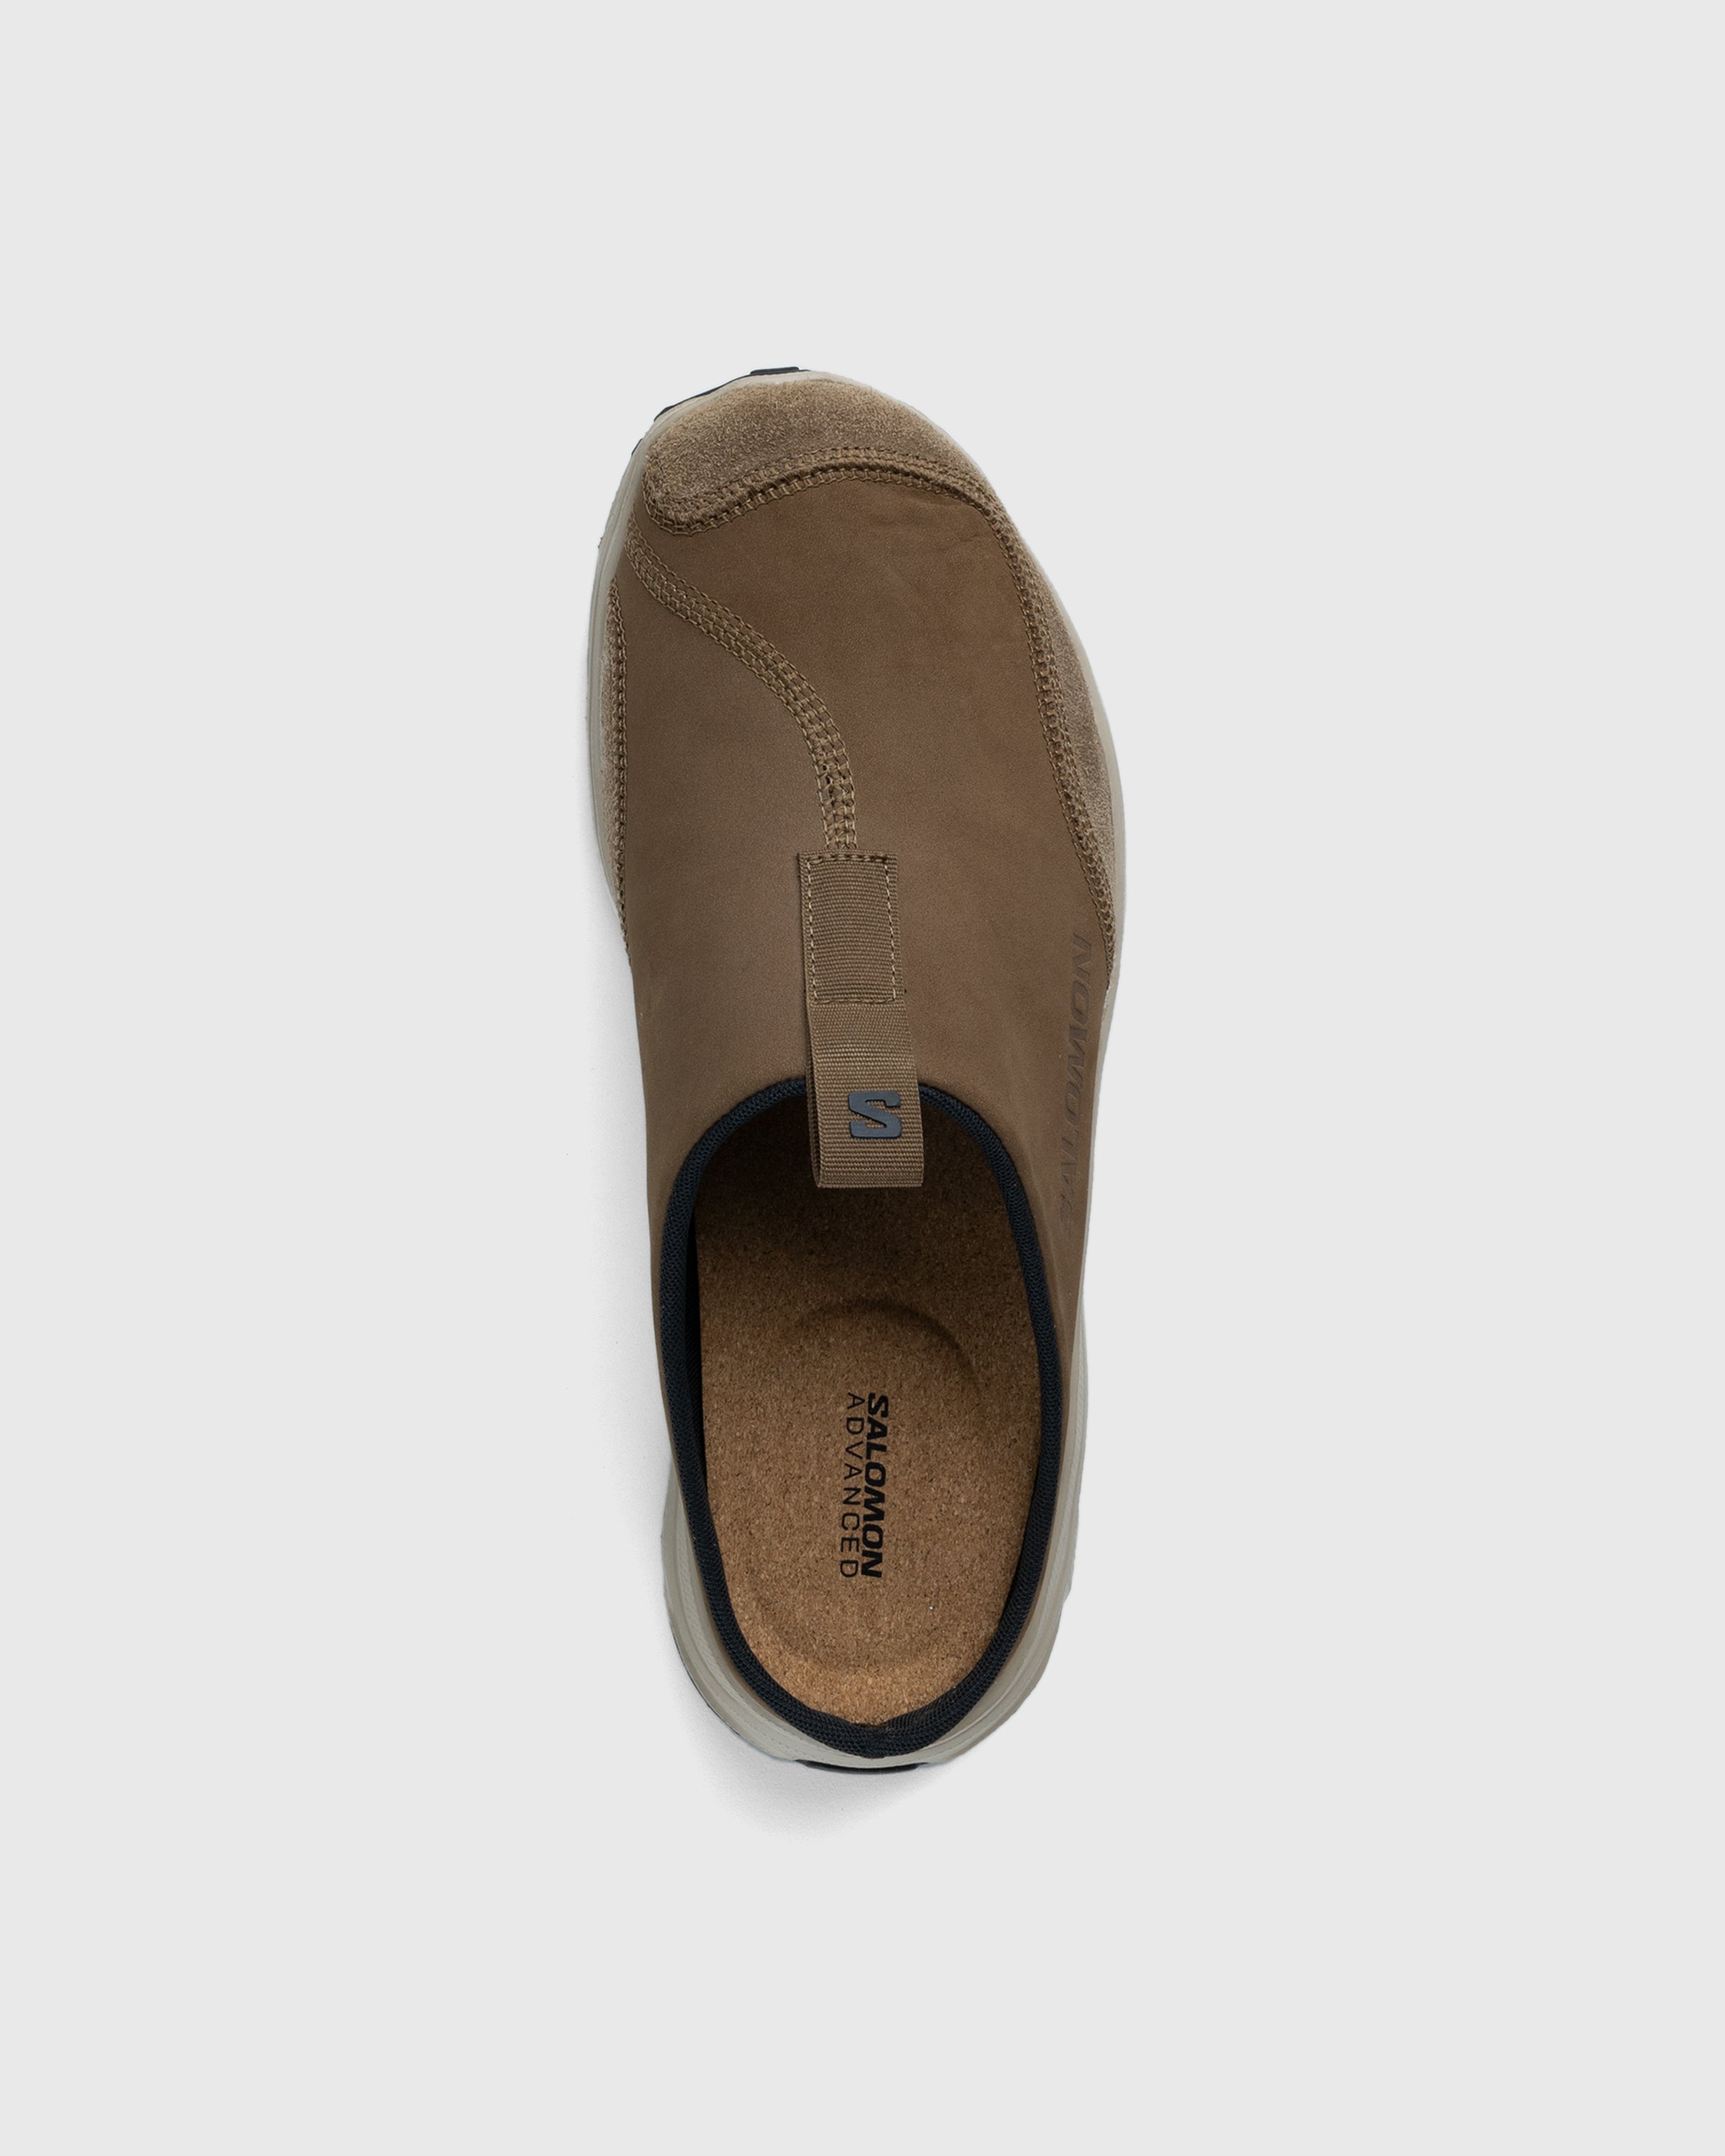 Salomon - RX Slide Leather Advanced Kang/Safari - Footwear - Beige - Image 6